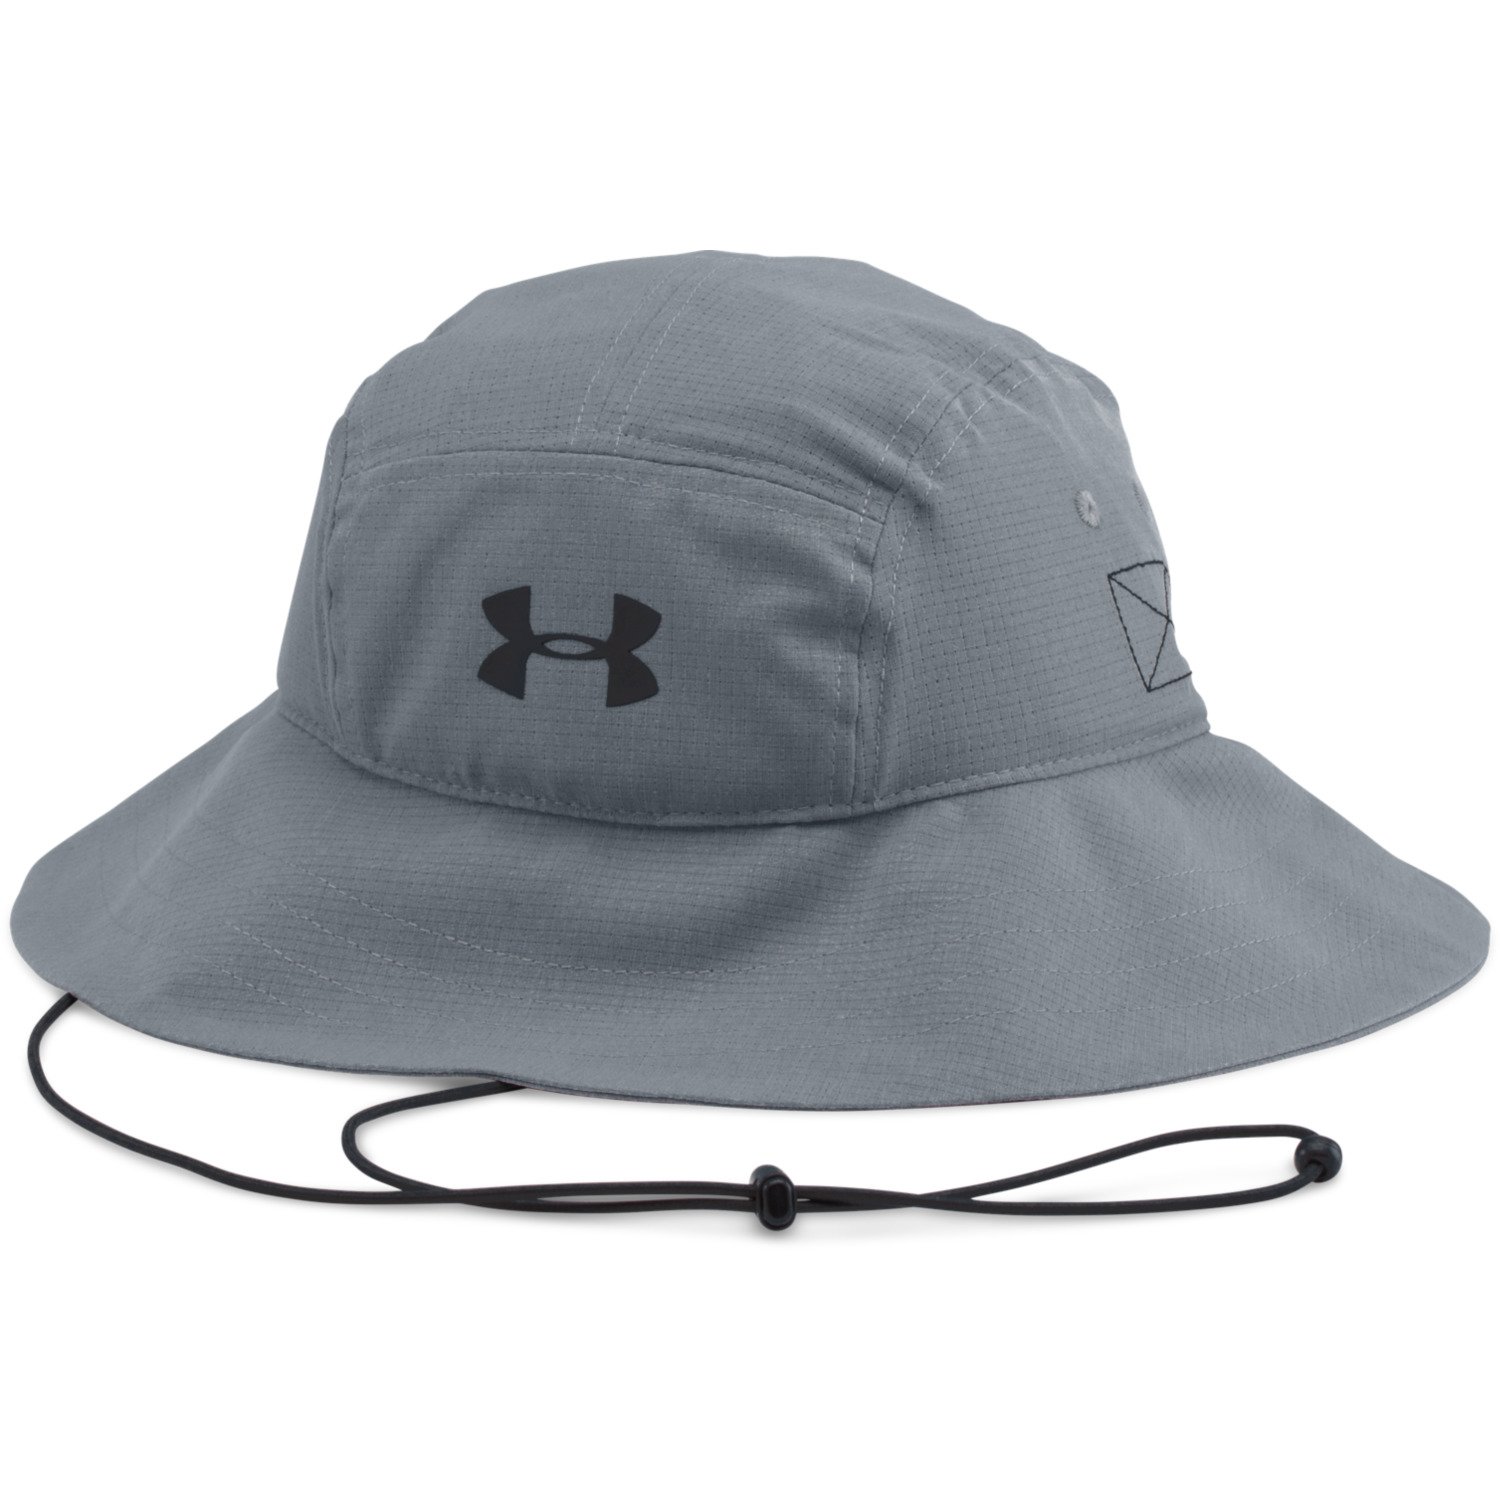 Cheap under armour safari hat Buy 